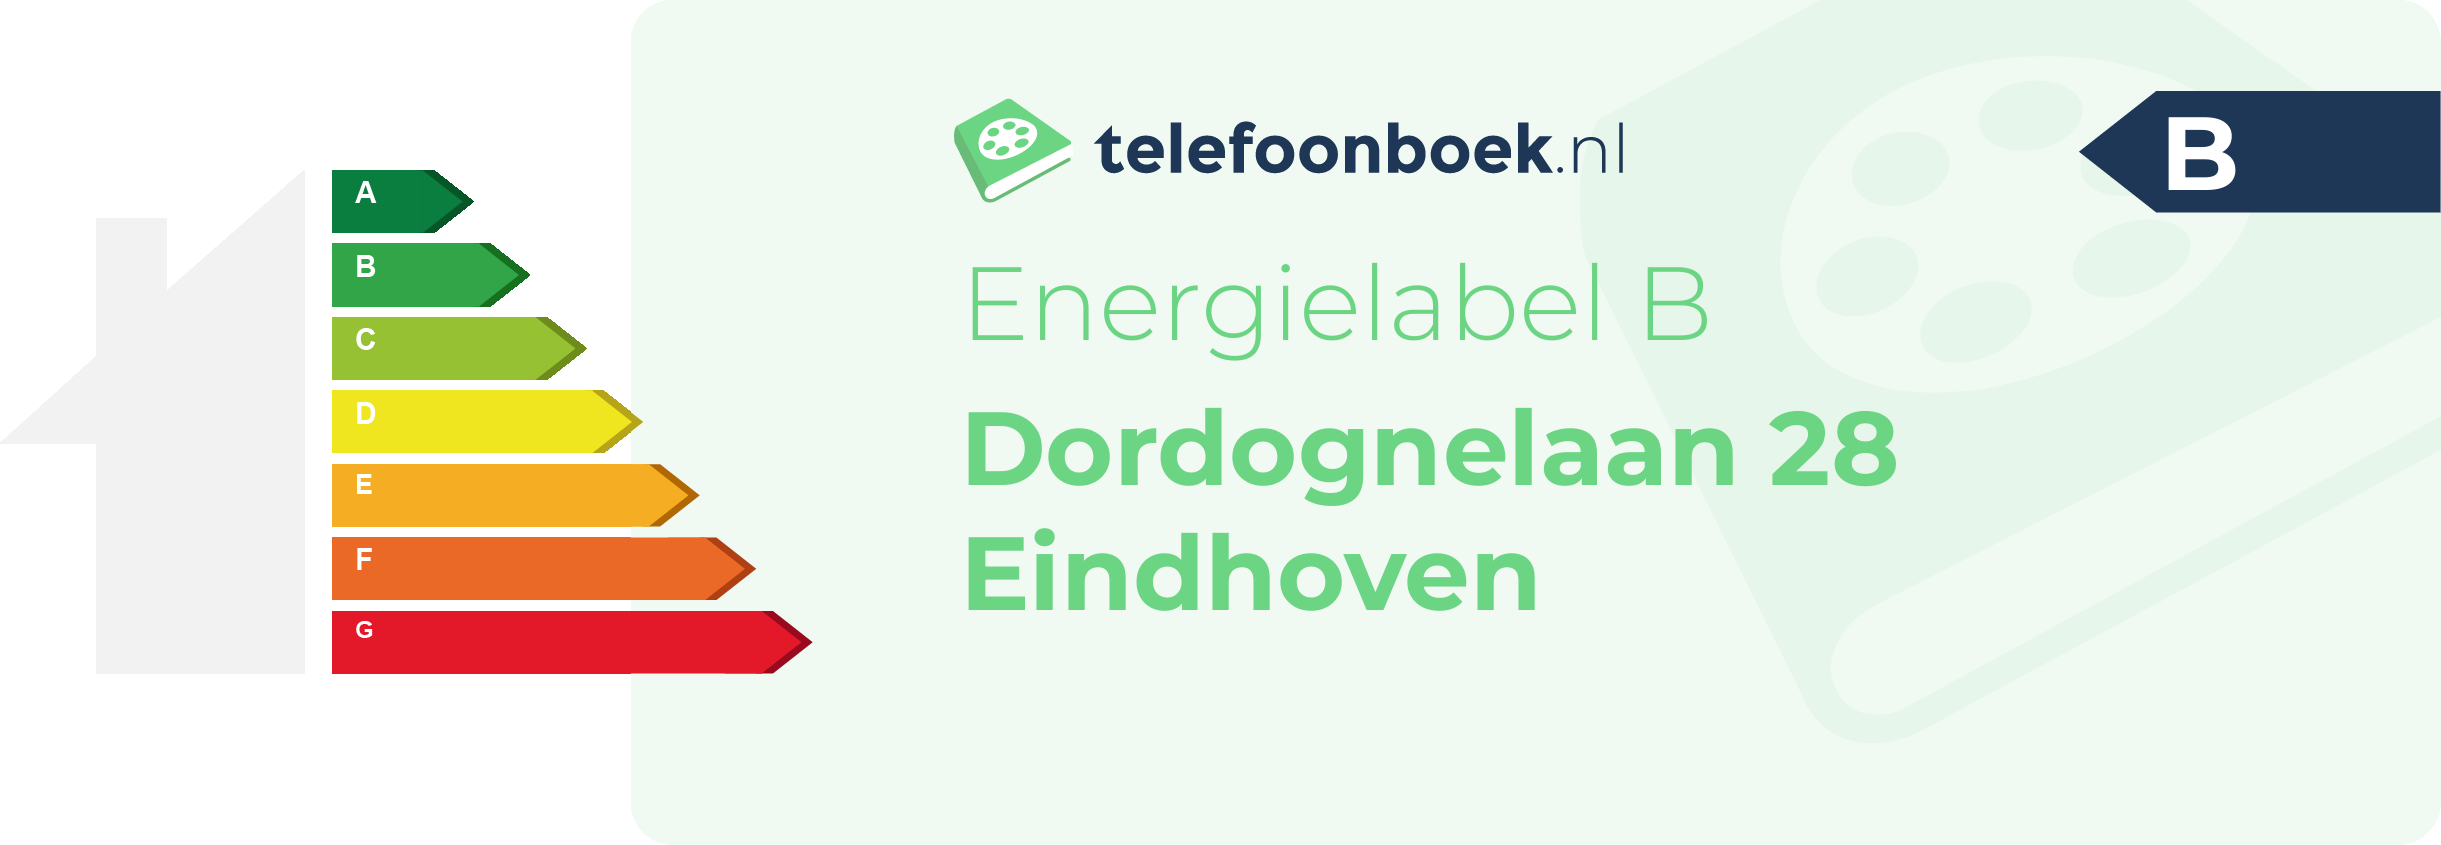 Energielabel Dordognelaan 28 Eindhoven